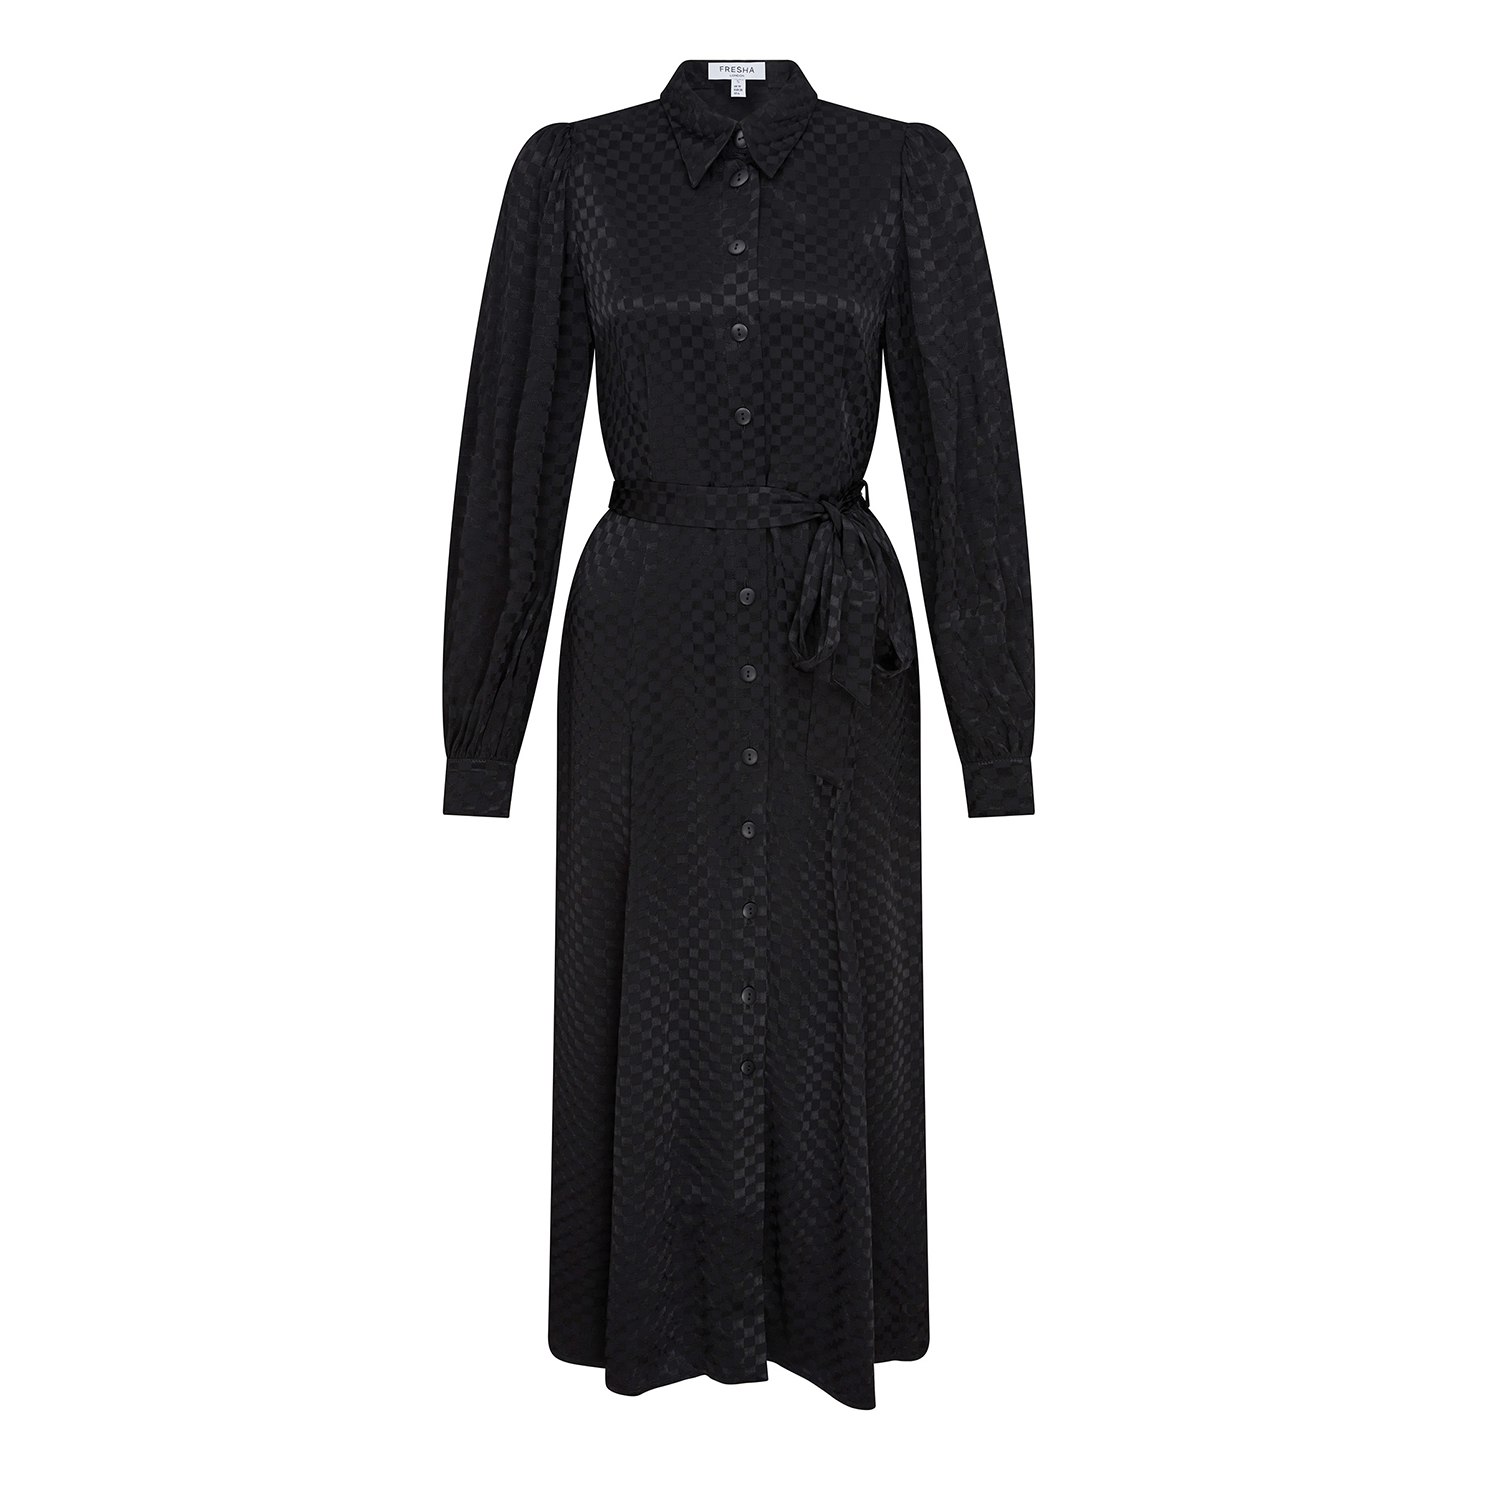 Fresha London Women's Maeve Dress Black Checkerboard